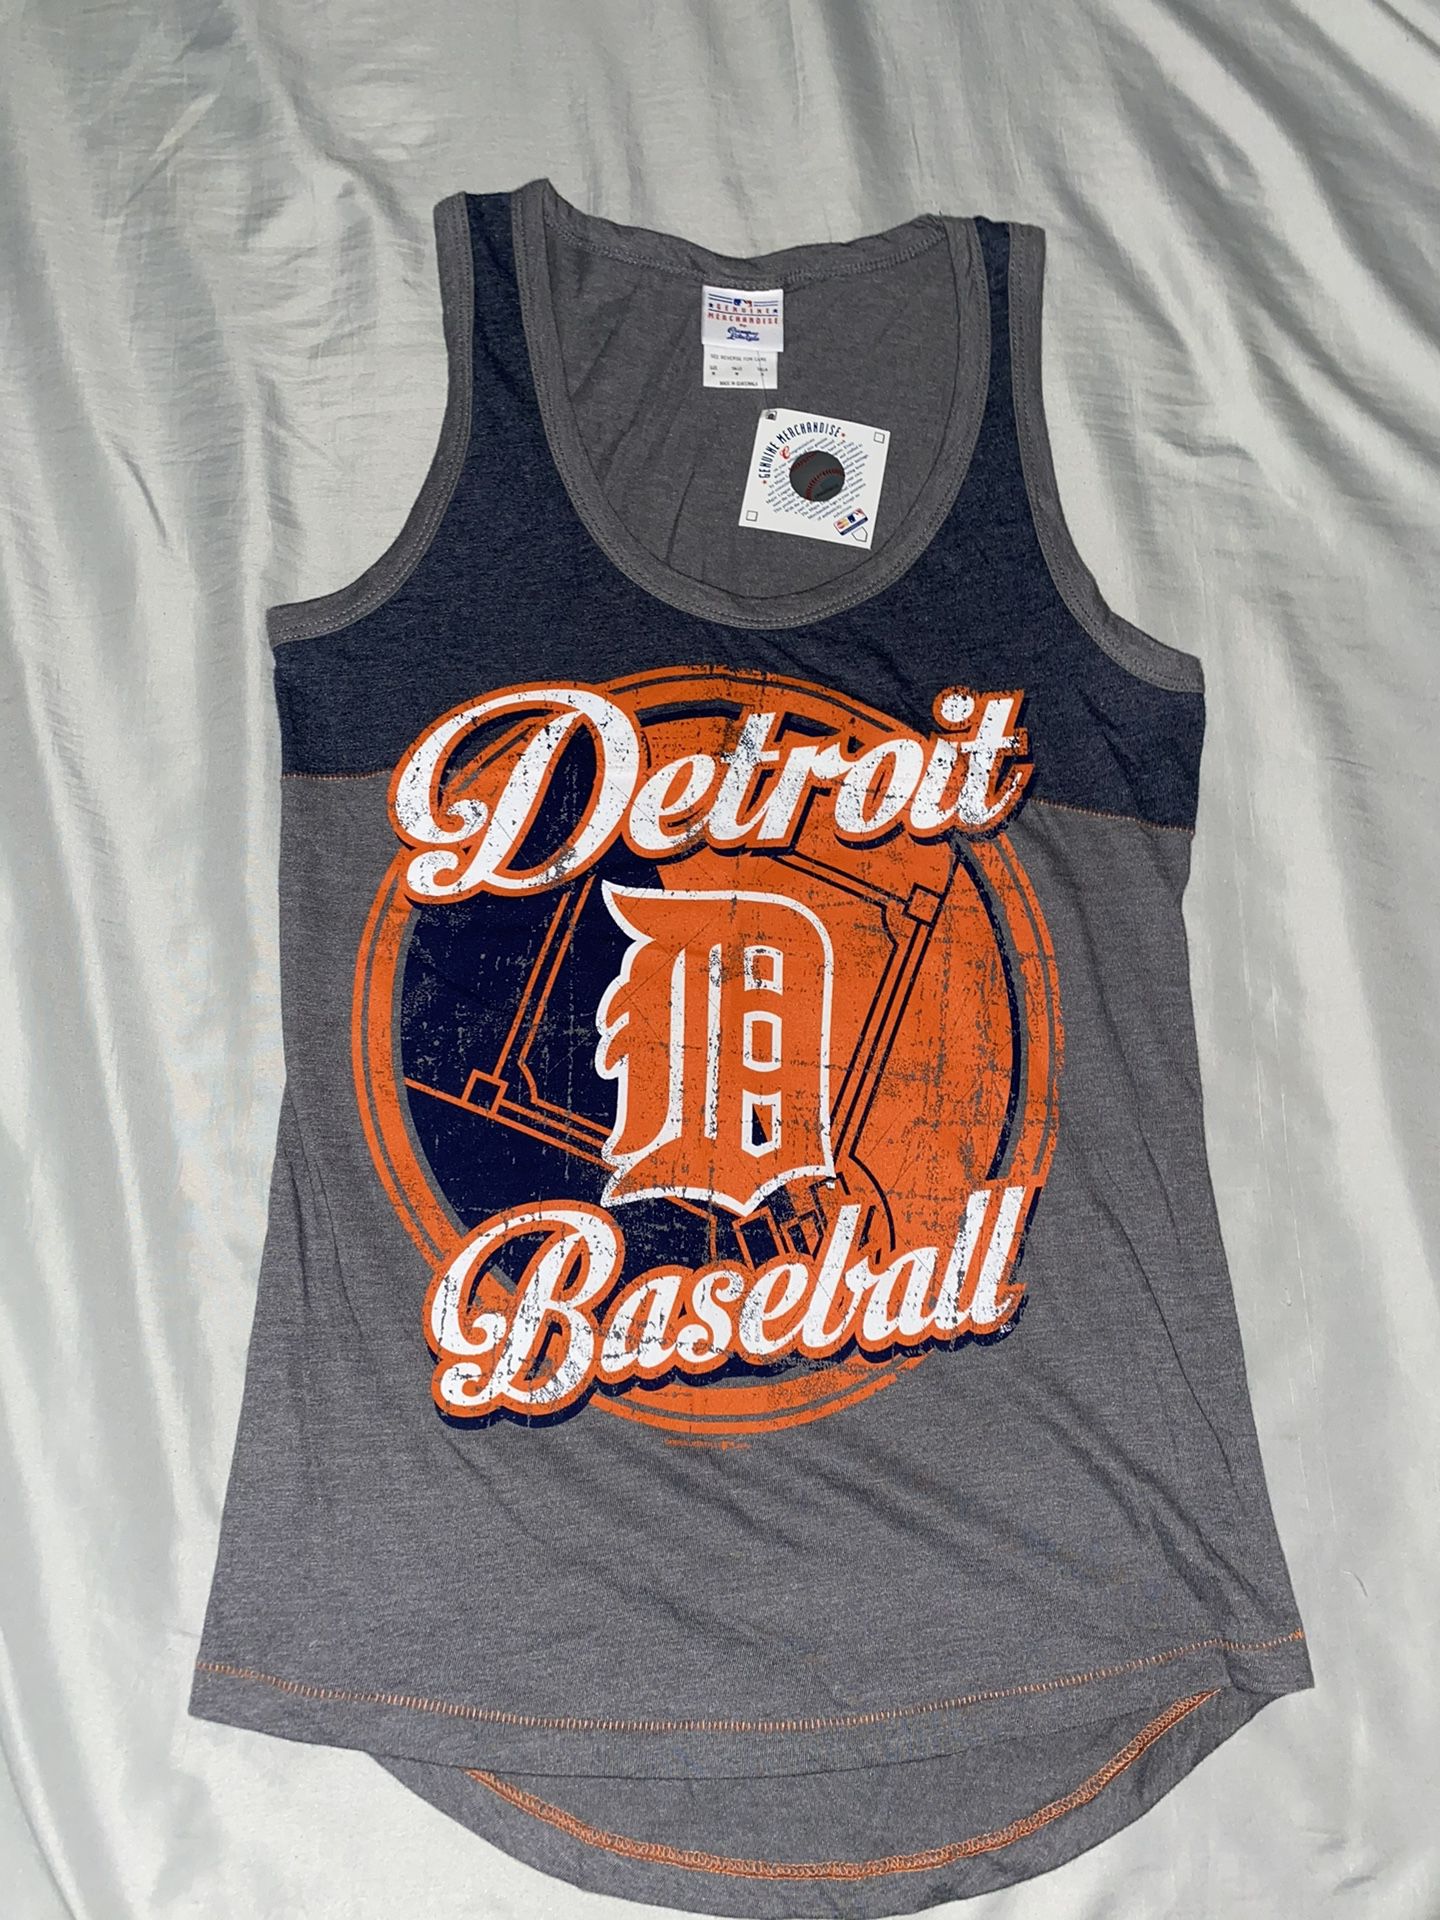 New With Tags Detroit Tigers Baseball Tank-Top Medium